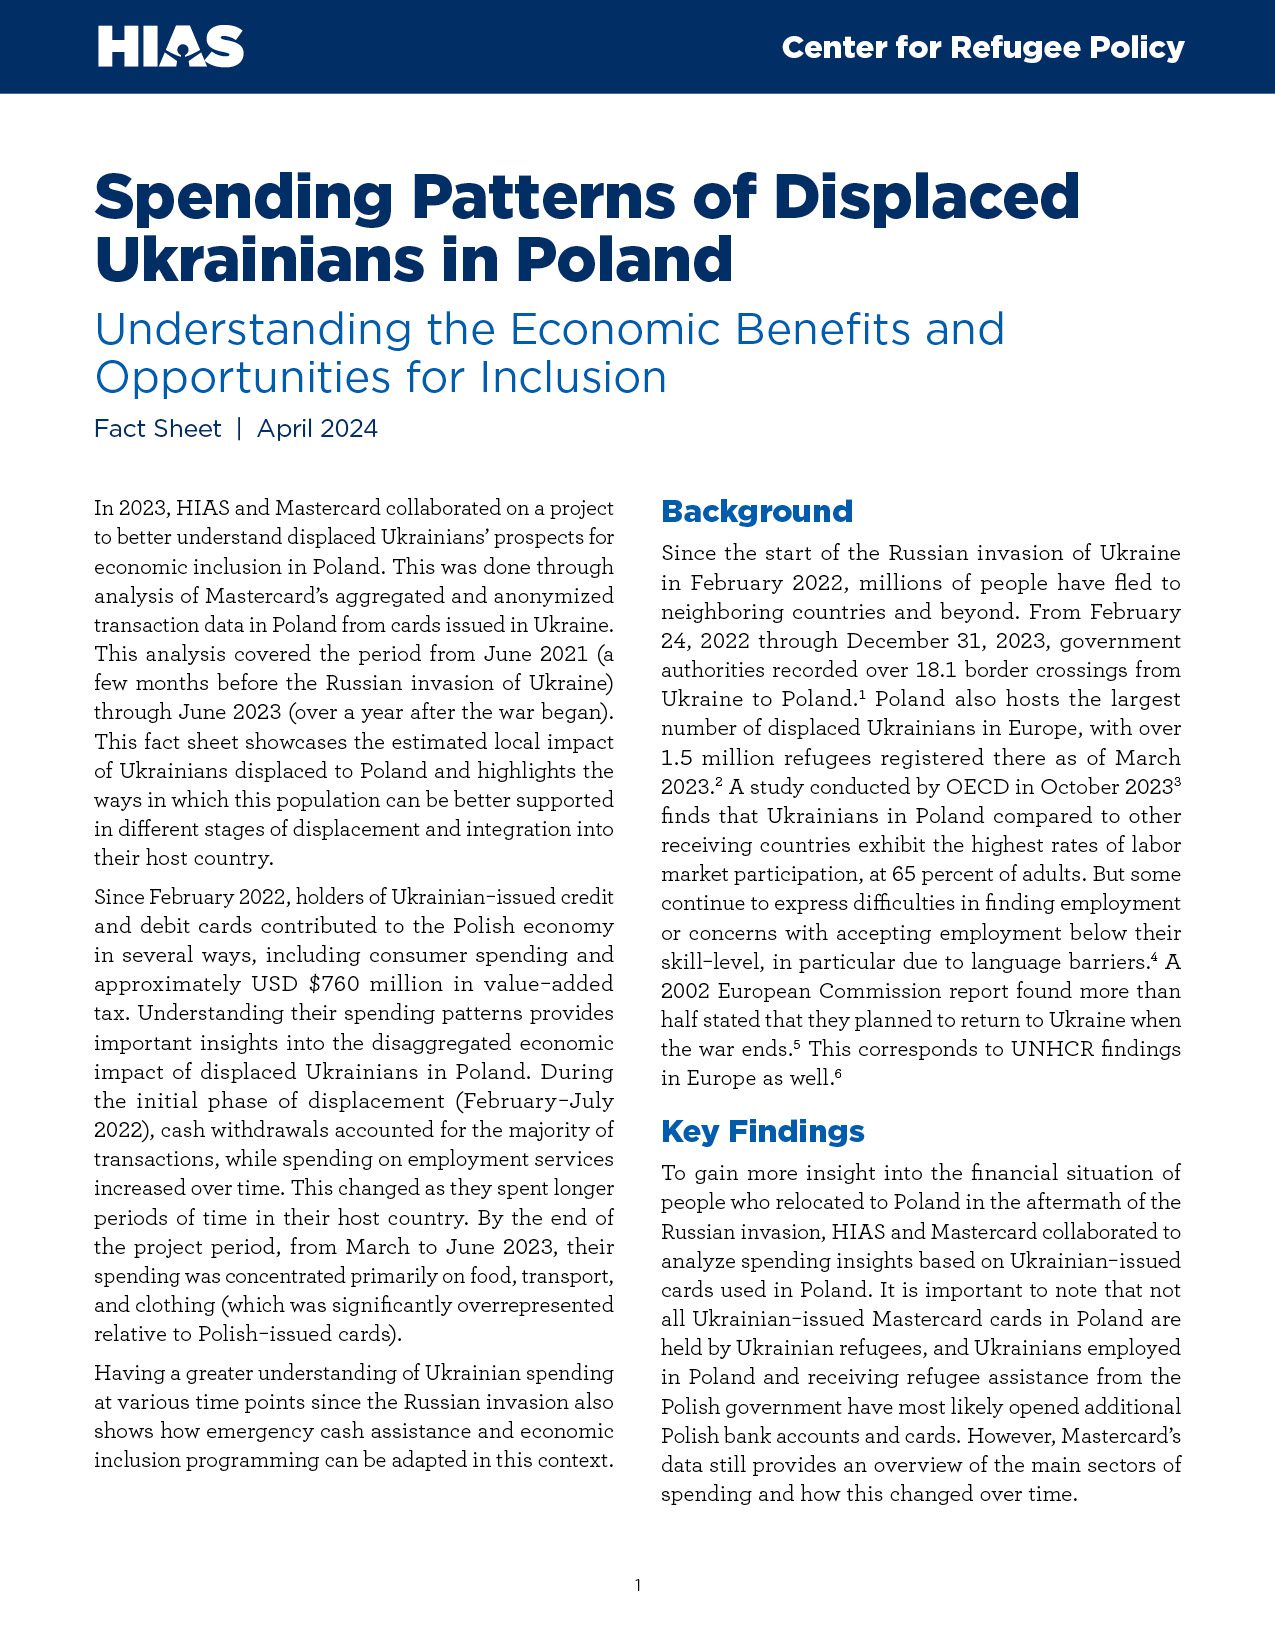 Spending Patterns of Displaced Ukrainians in Poland